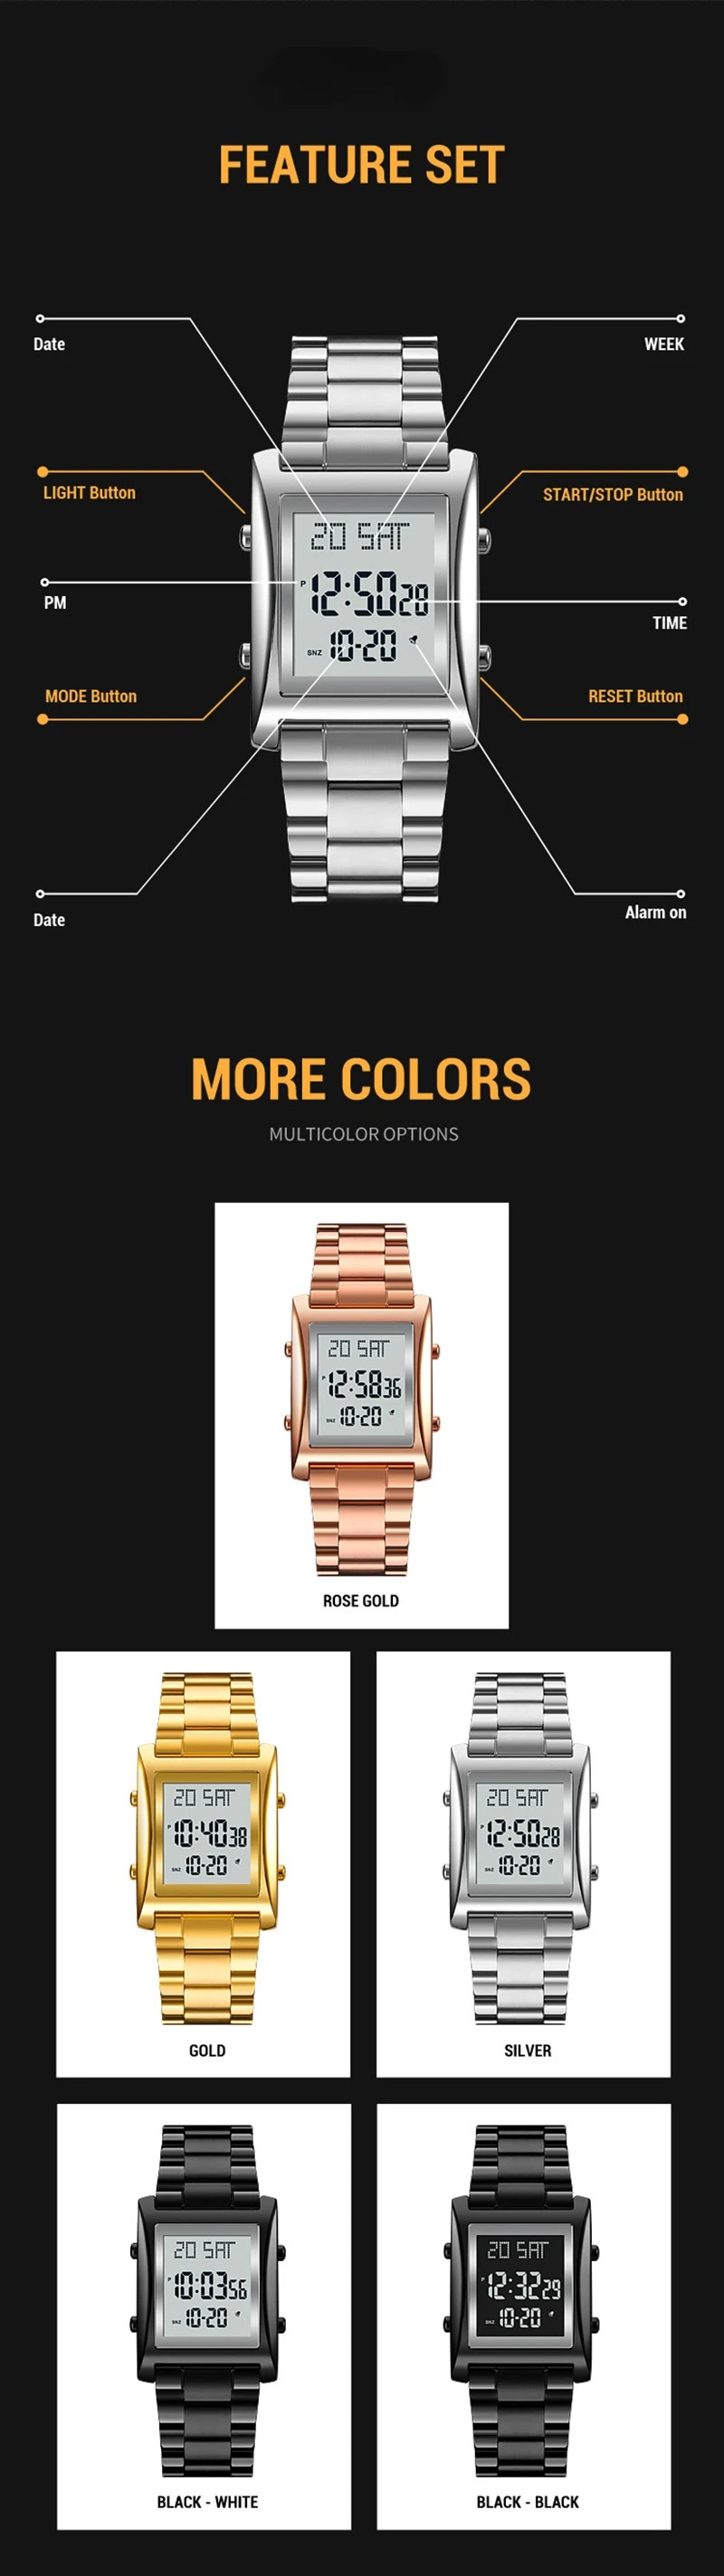 2021 New Fashion Mens Digital Watches Luminous Waterproof Male Clock Electronic Wristwatch Relogio Masculino Montre Homme Alarm digital wrist watch for men